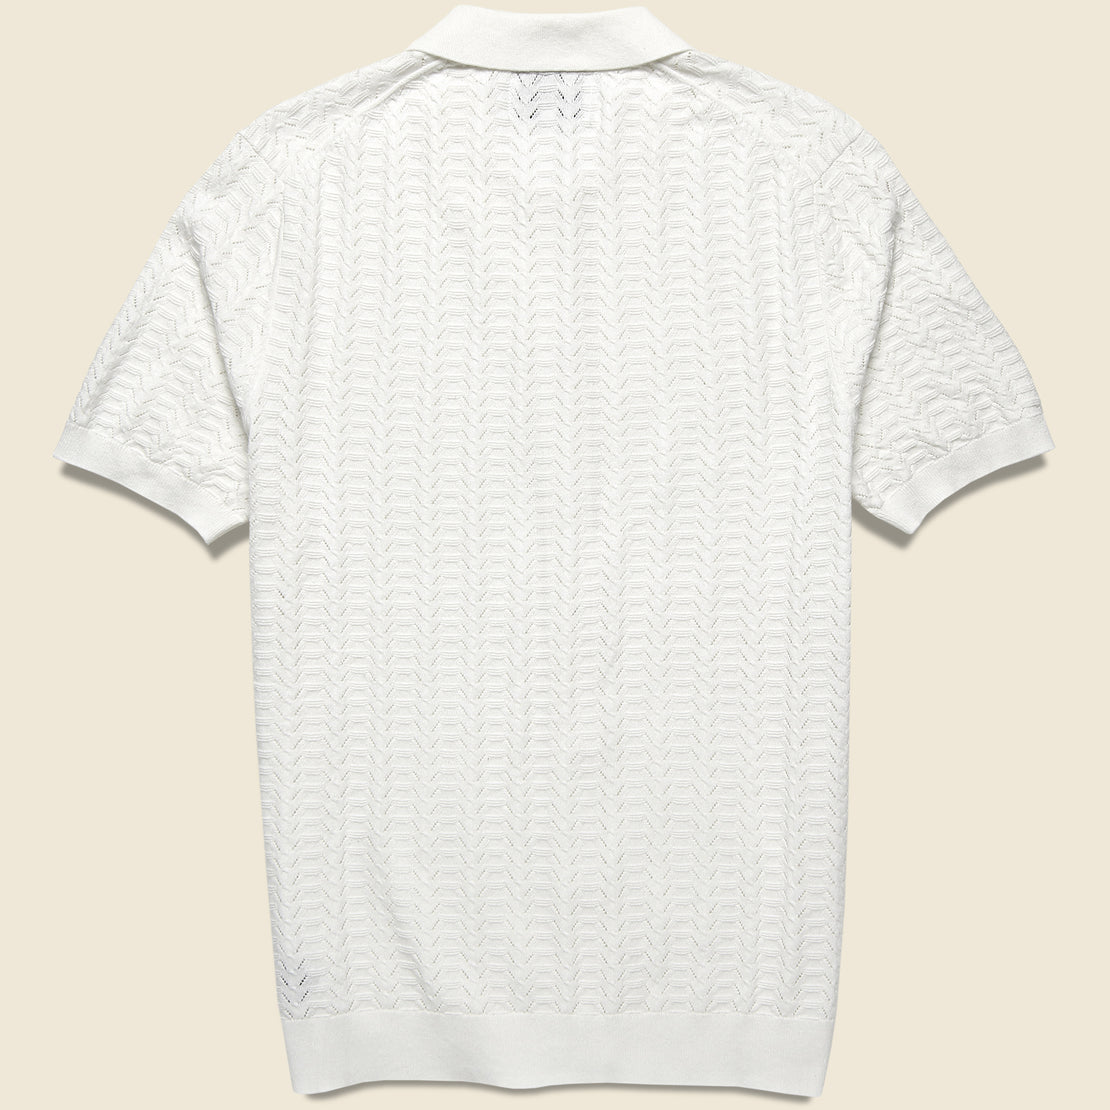 Pointelle Tellaro Shirt - Ecru - Wax London - STAG Provisions - Tops - S/S Knit